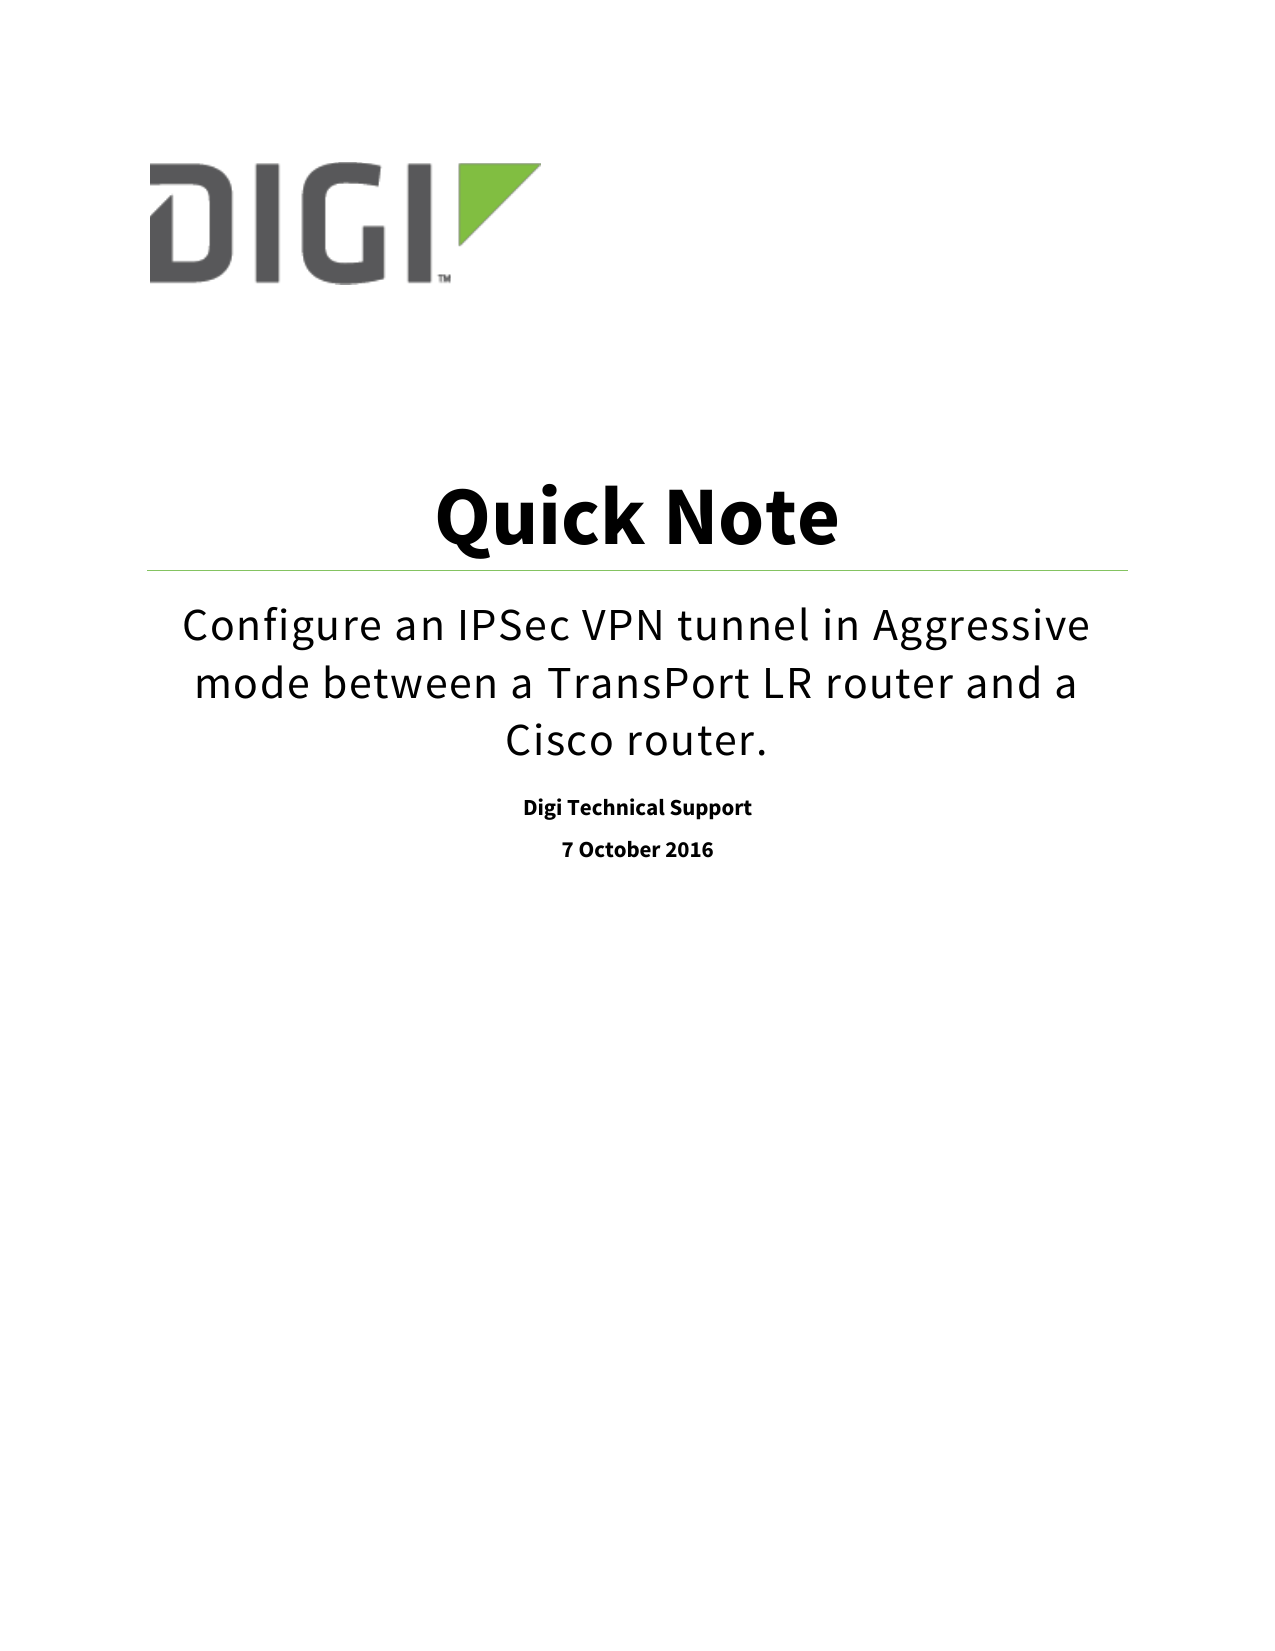 cisco ipsec vpn client aggressive mode configuration